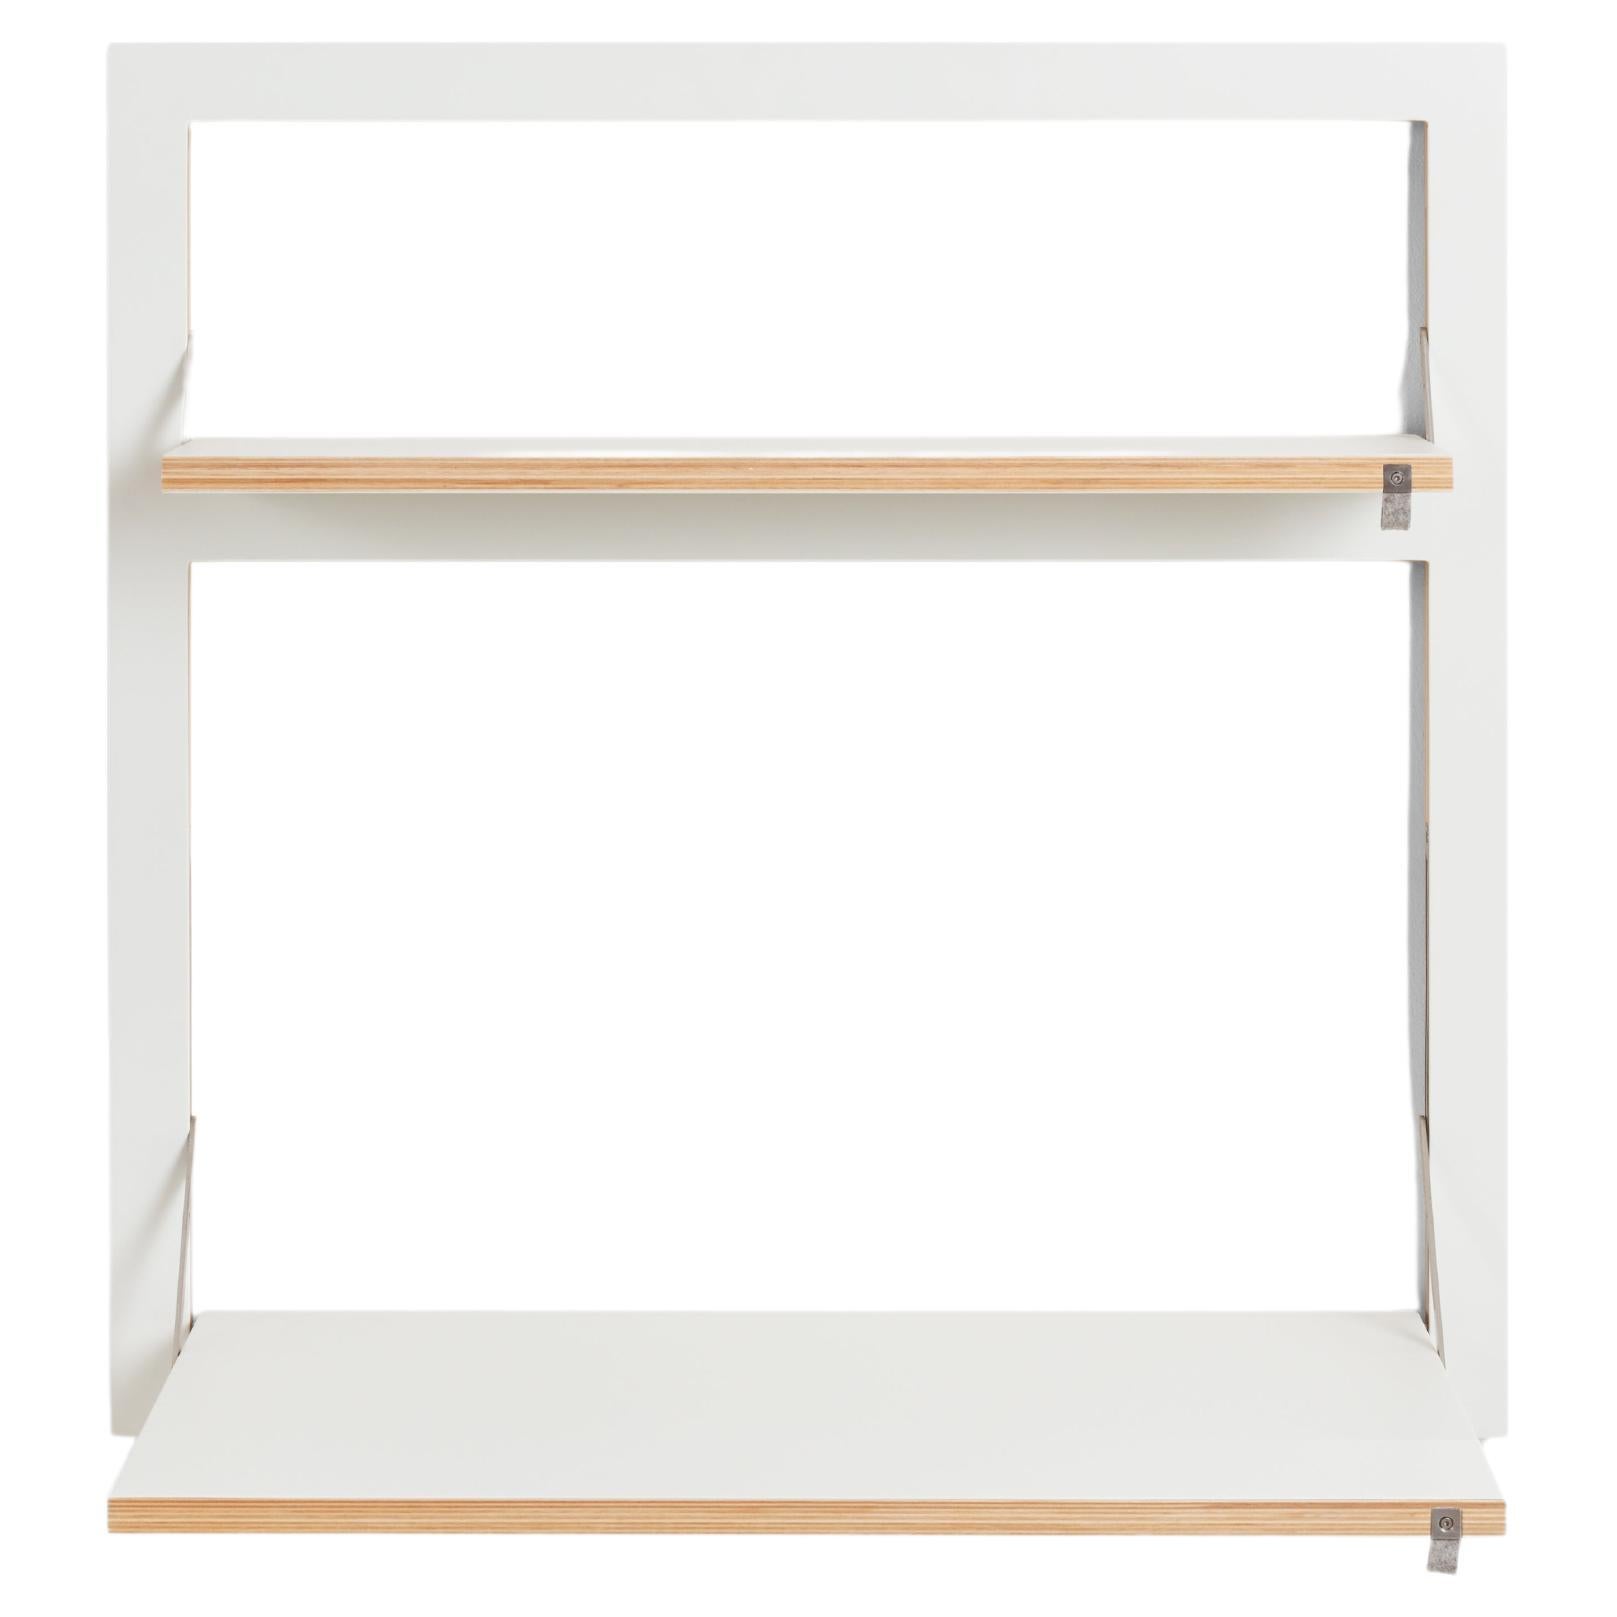 Fläpps Wall Desk/Secretary White 80x80-2  For Sale